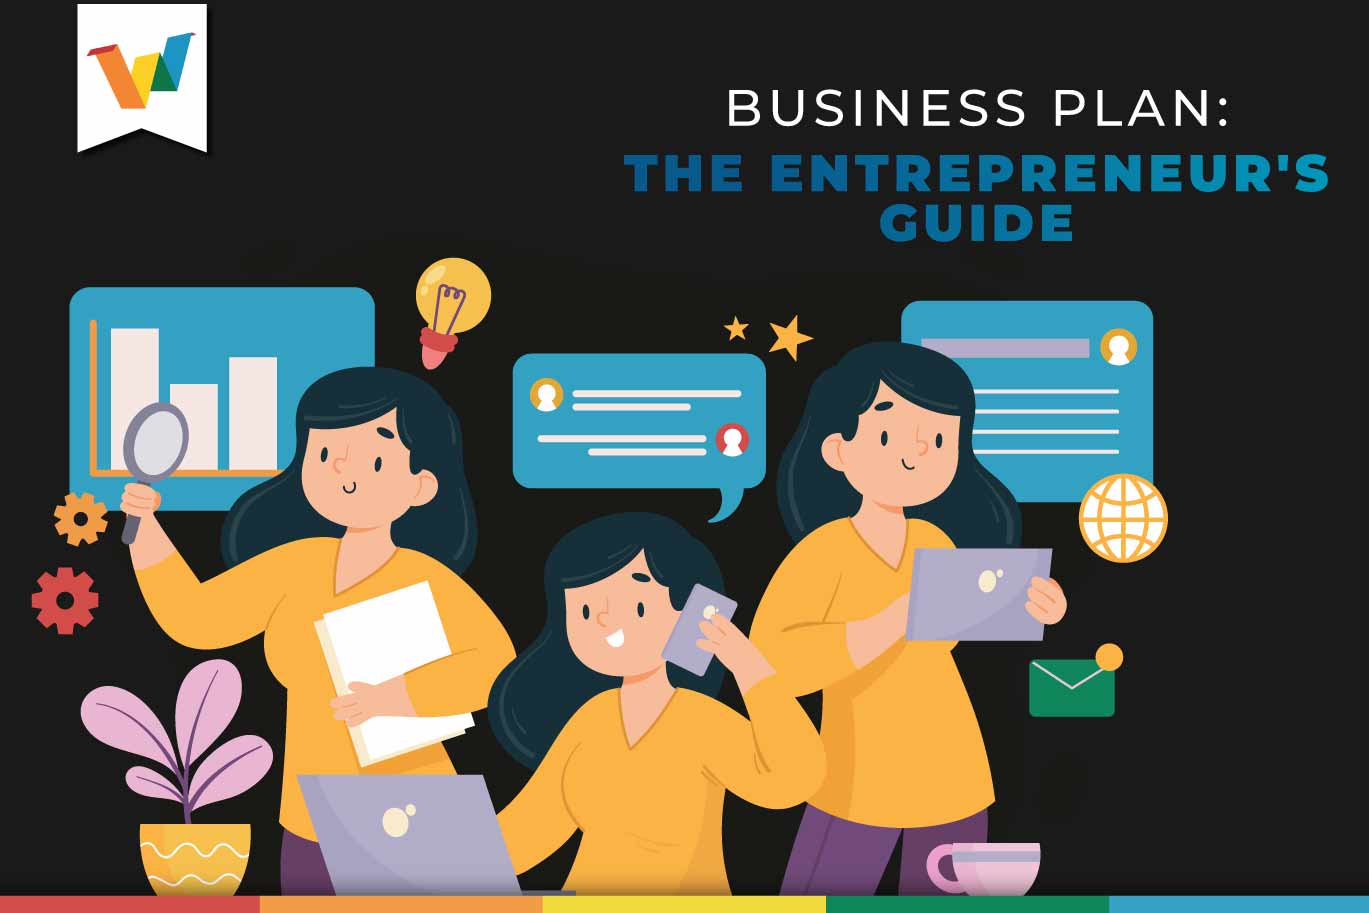 Business plan: the entrepreneur's guide